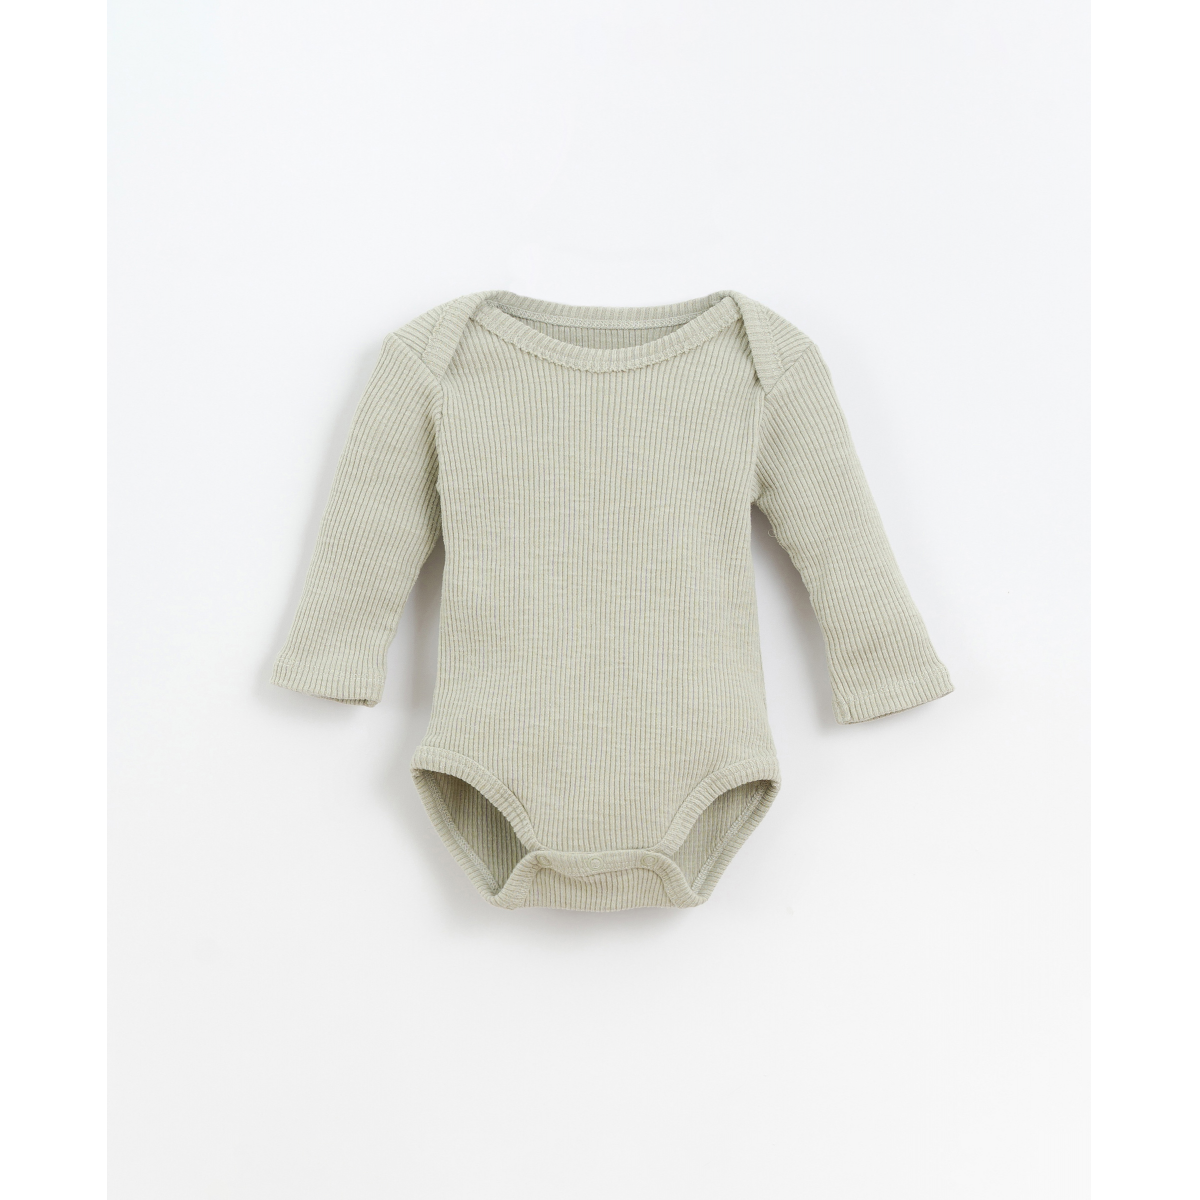 Long-sleeved baby boy bodysuit in organic cotton rib knit